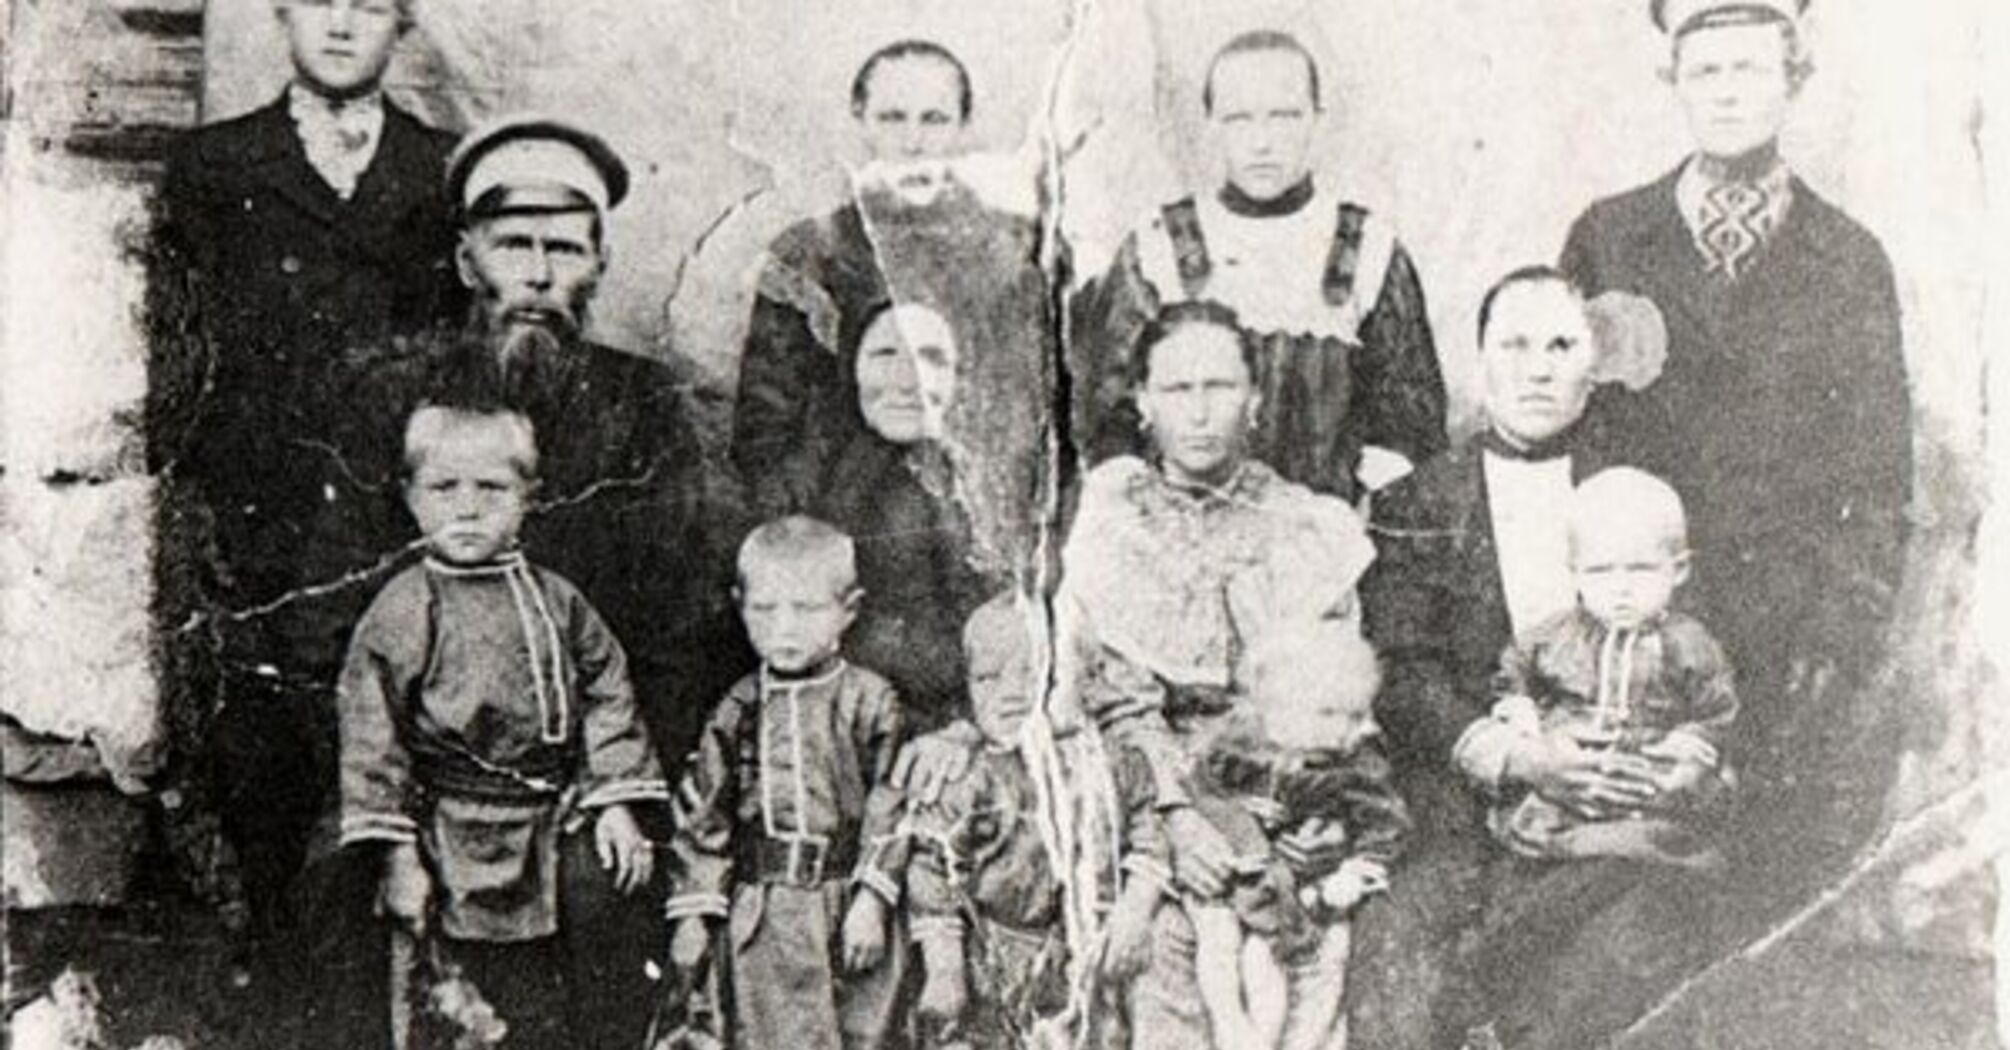 Your ancestors belonged to an elite Cossack family